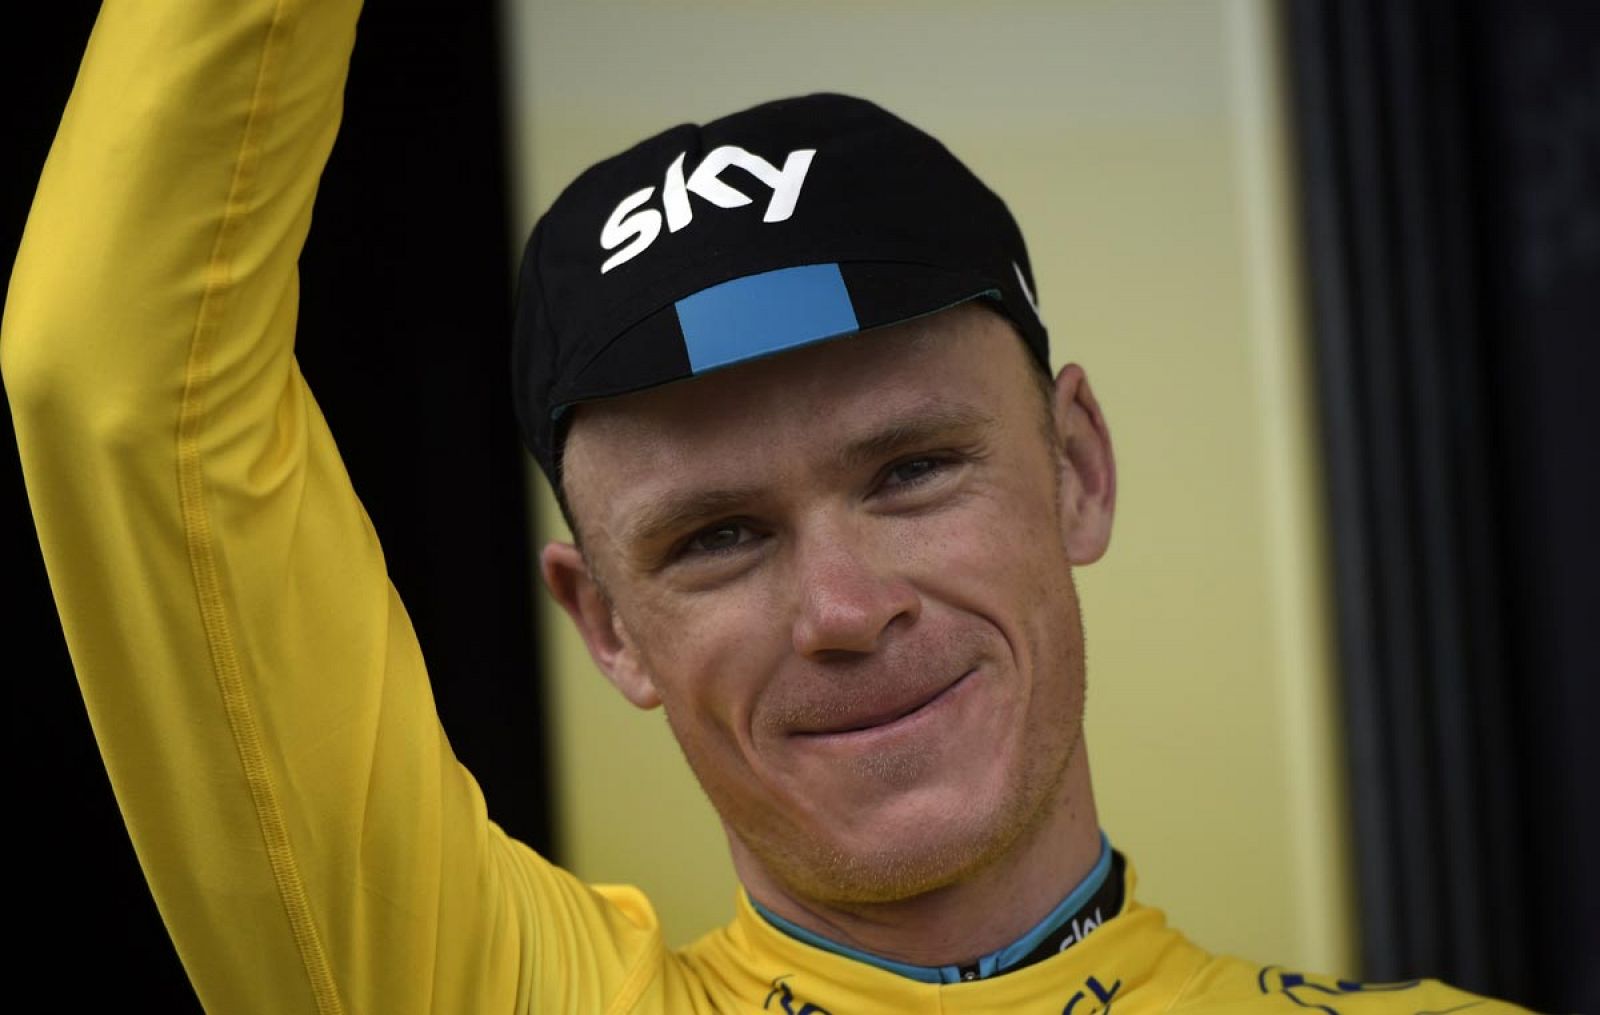 Froome es el actual líder del Tour de Francia 2015